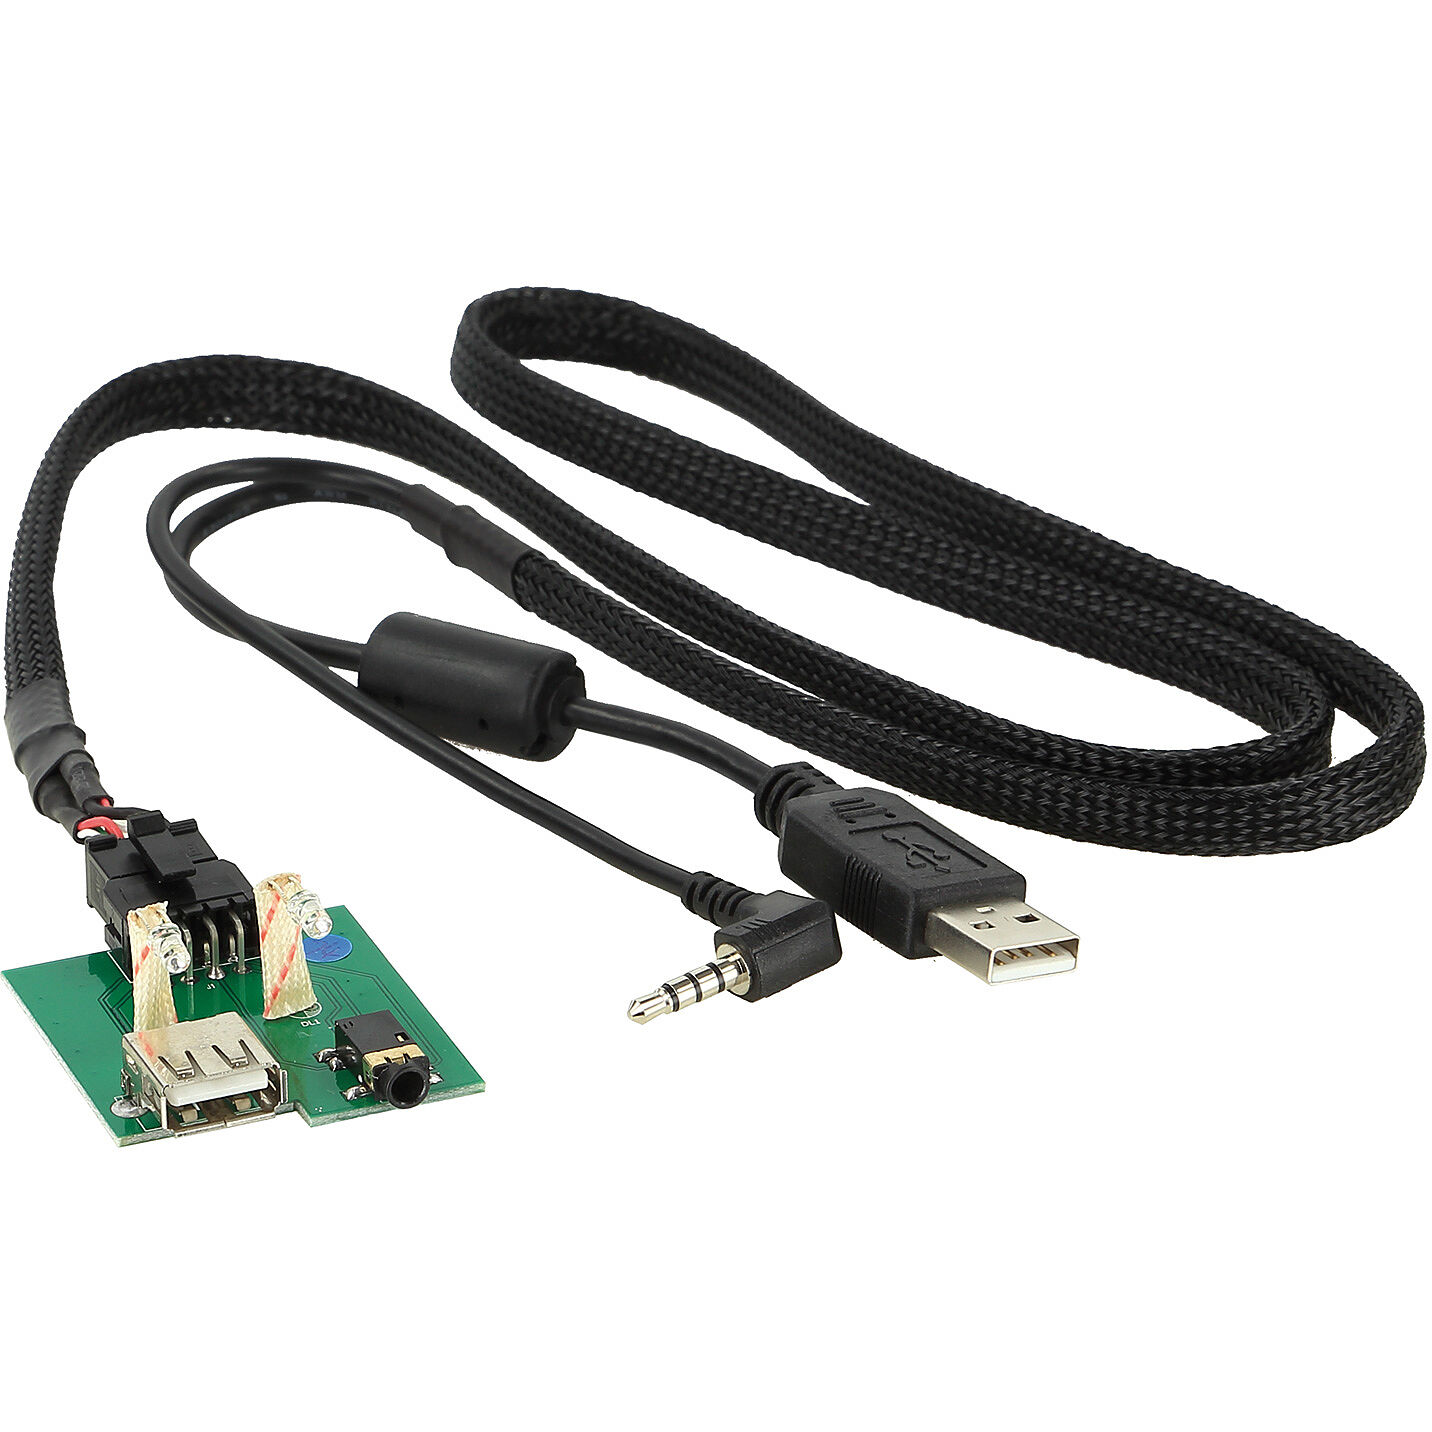 Connect C3901-USB